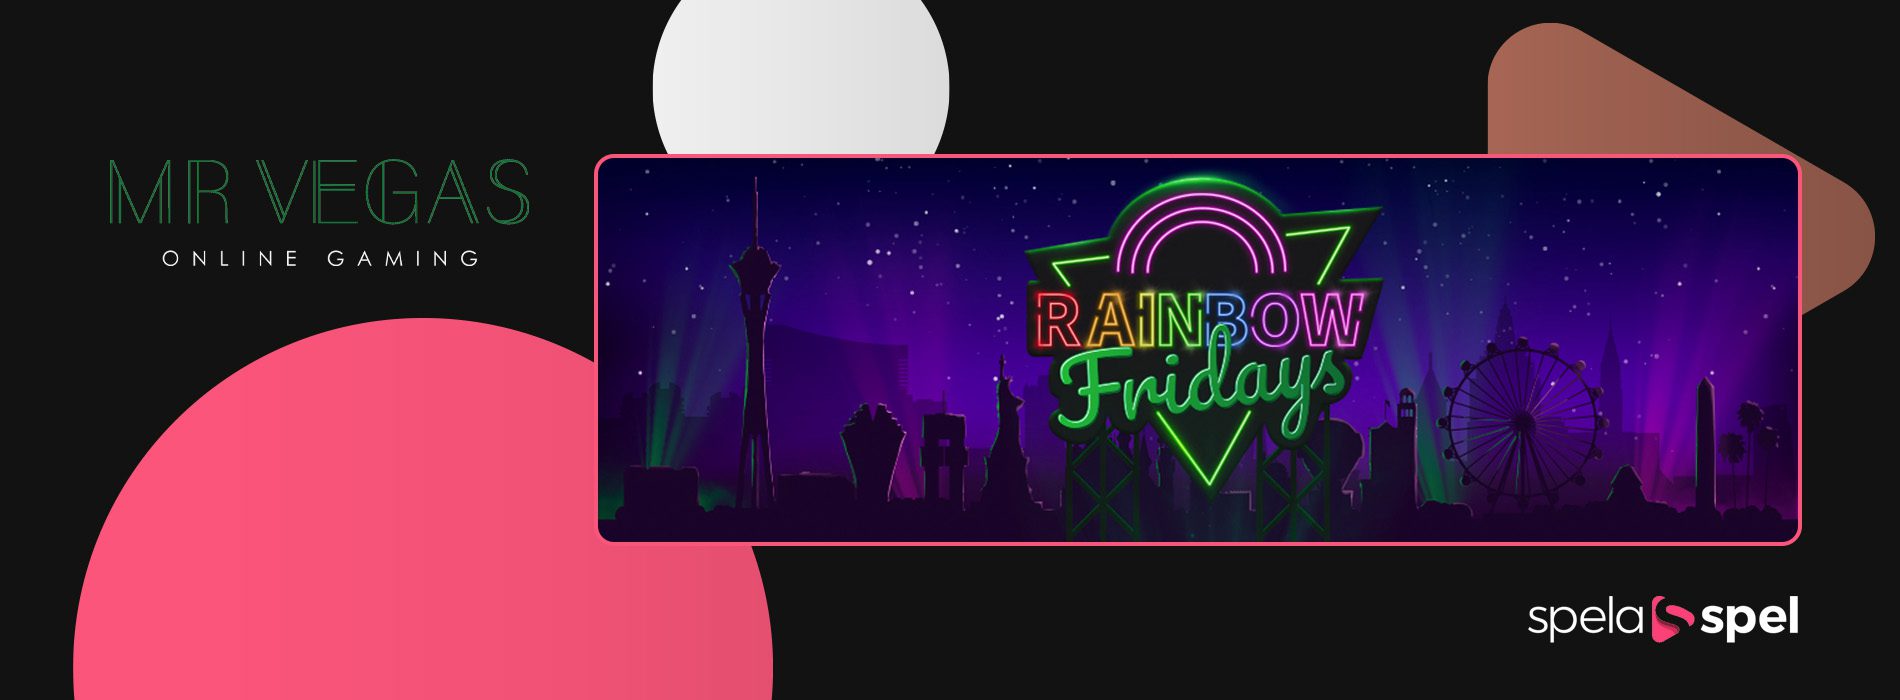 Rainbow Fridays - Mr Vegas